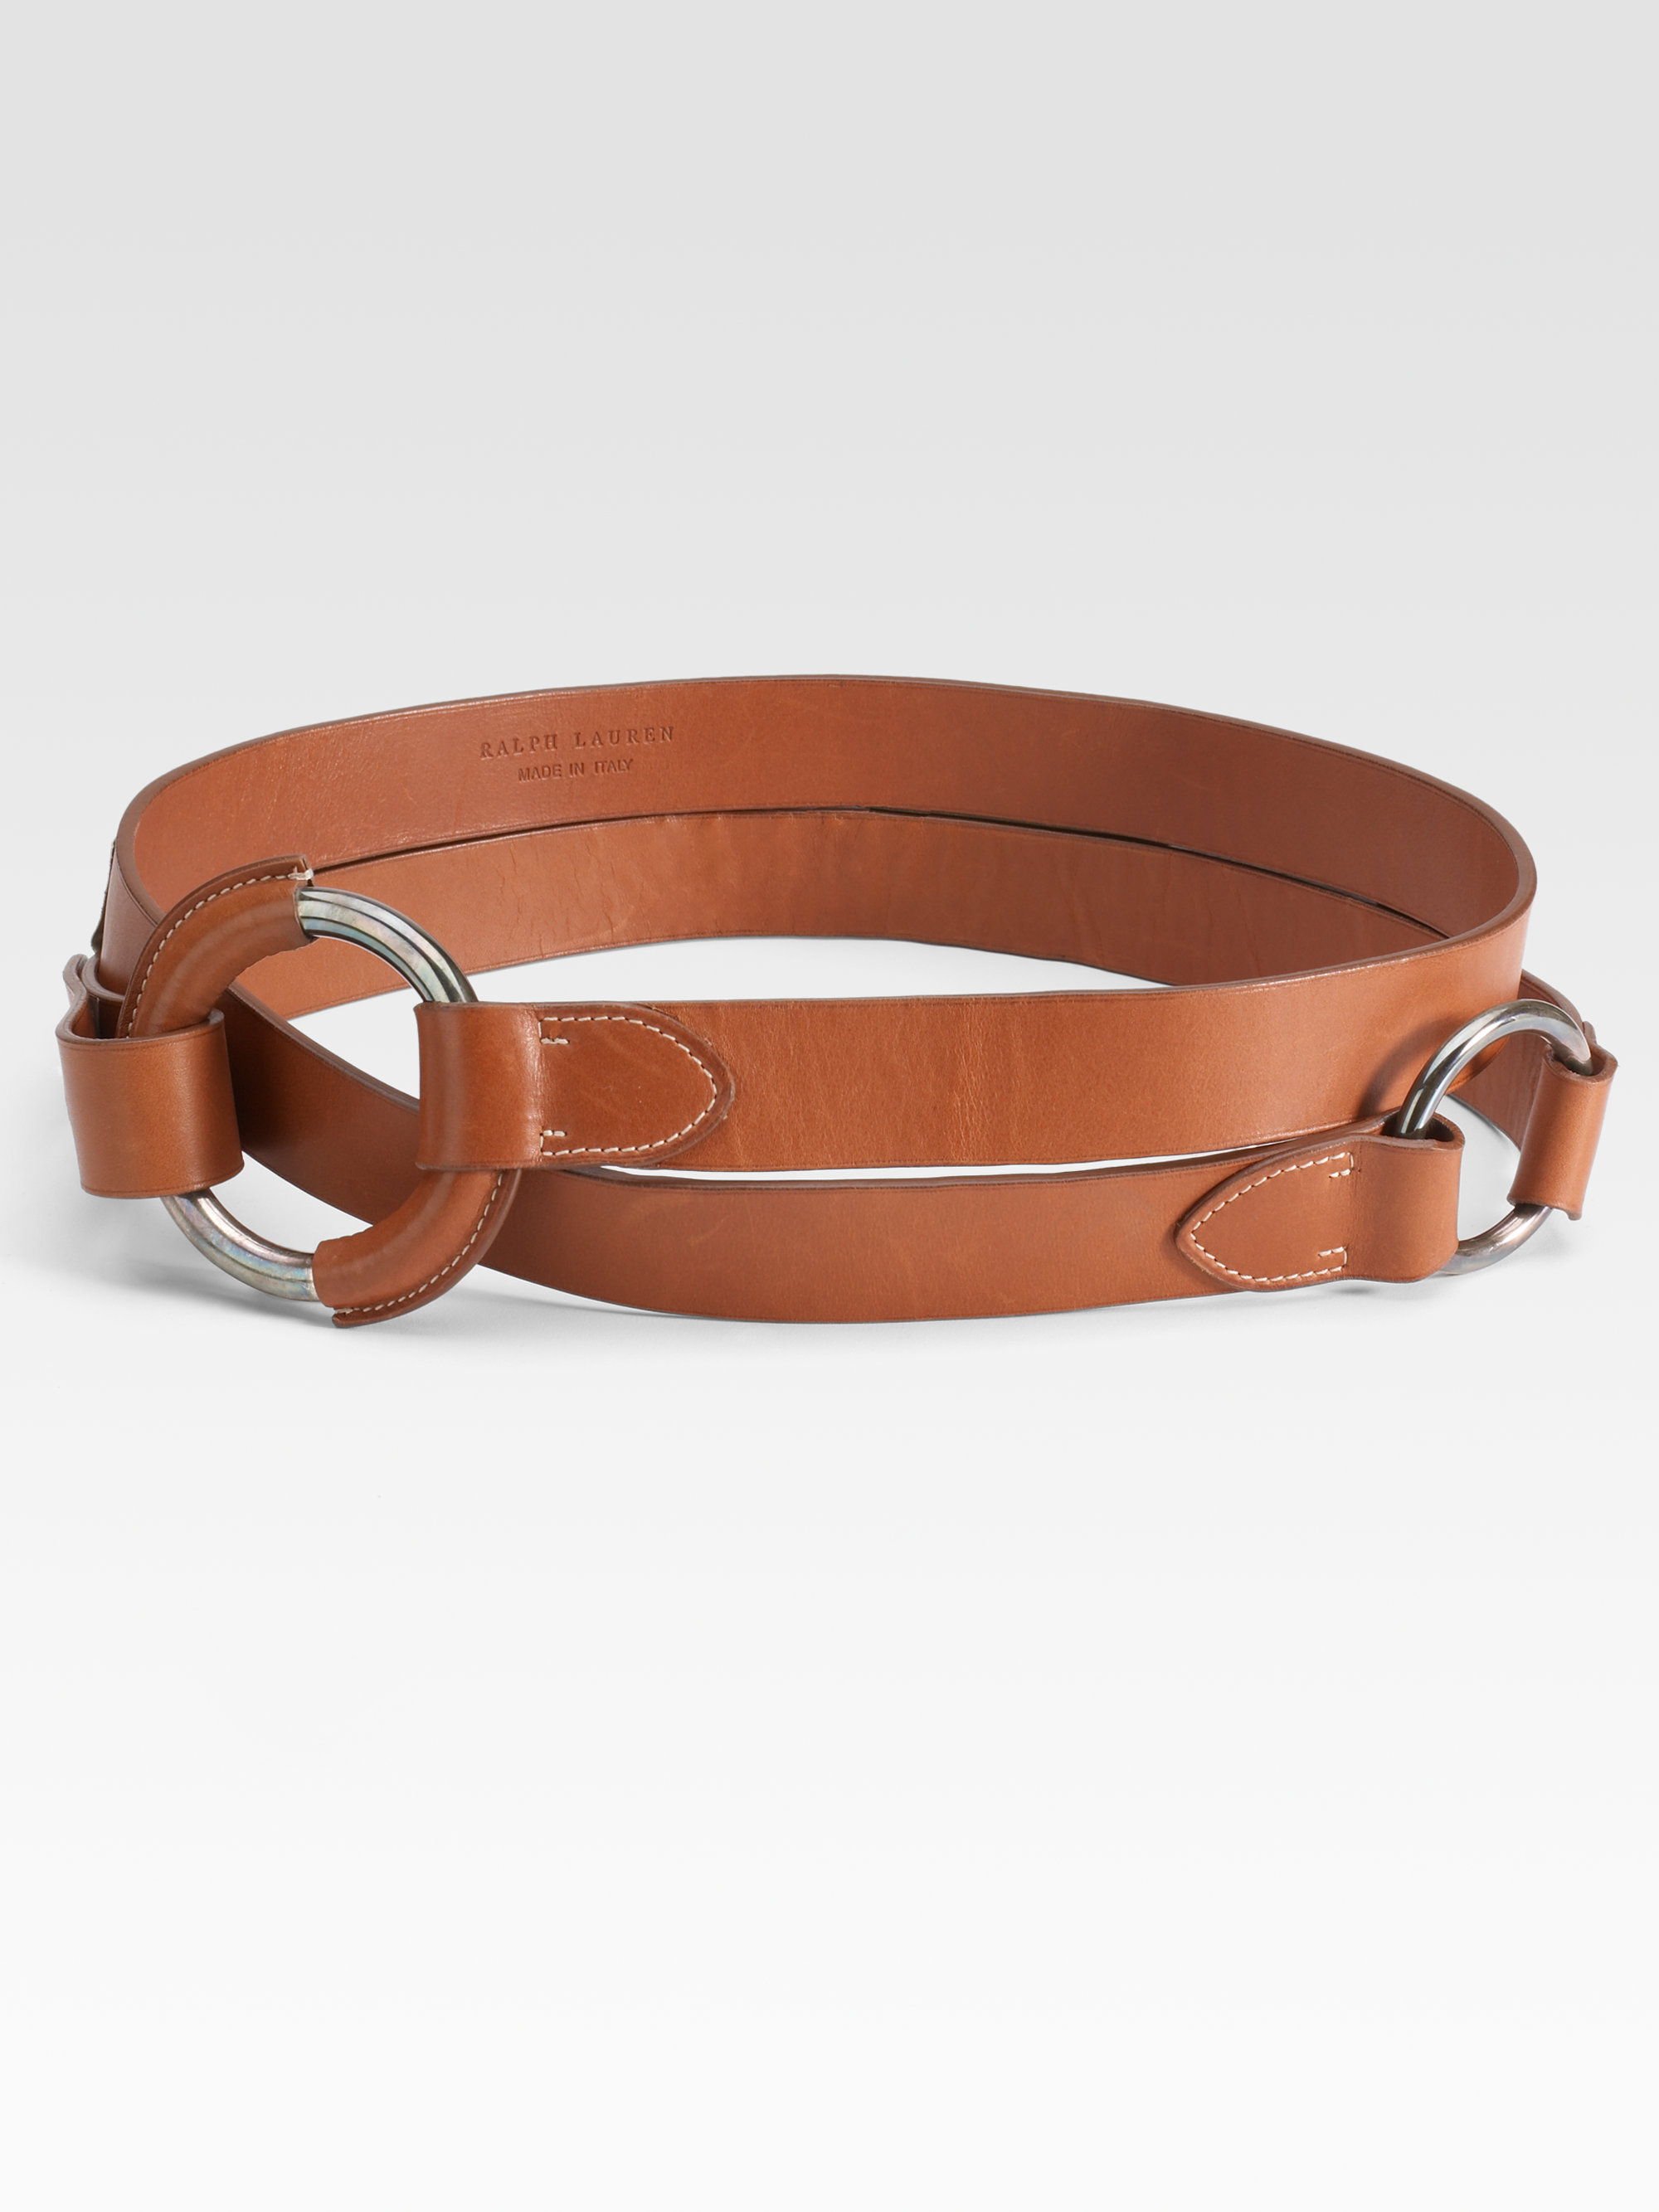 Ralph Lauren Collection Double Wrap Belt in Brown | Lyst